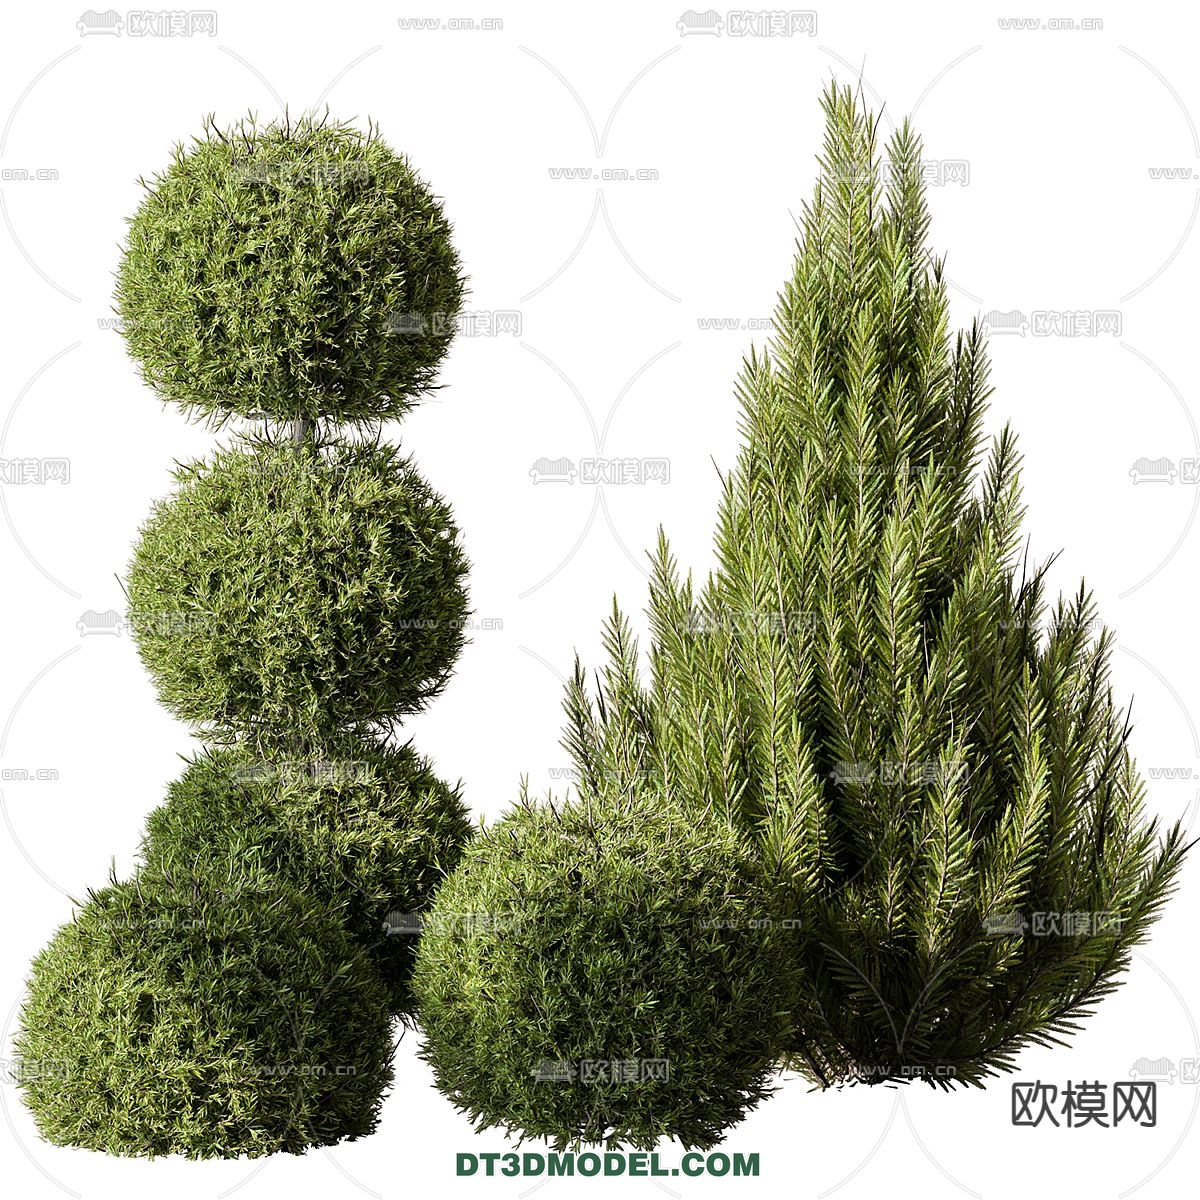 PLANTS – BUSH – CORONA – 3D MODEL – 351 - thumbnail 1